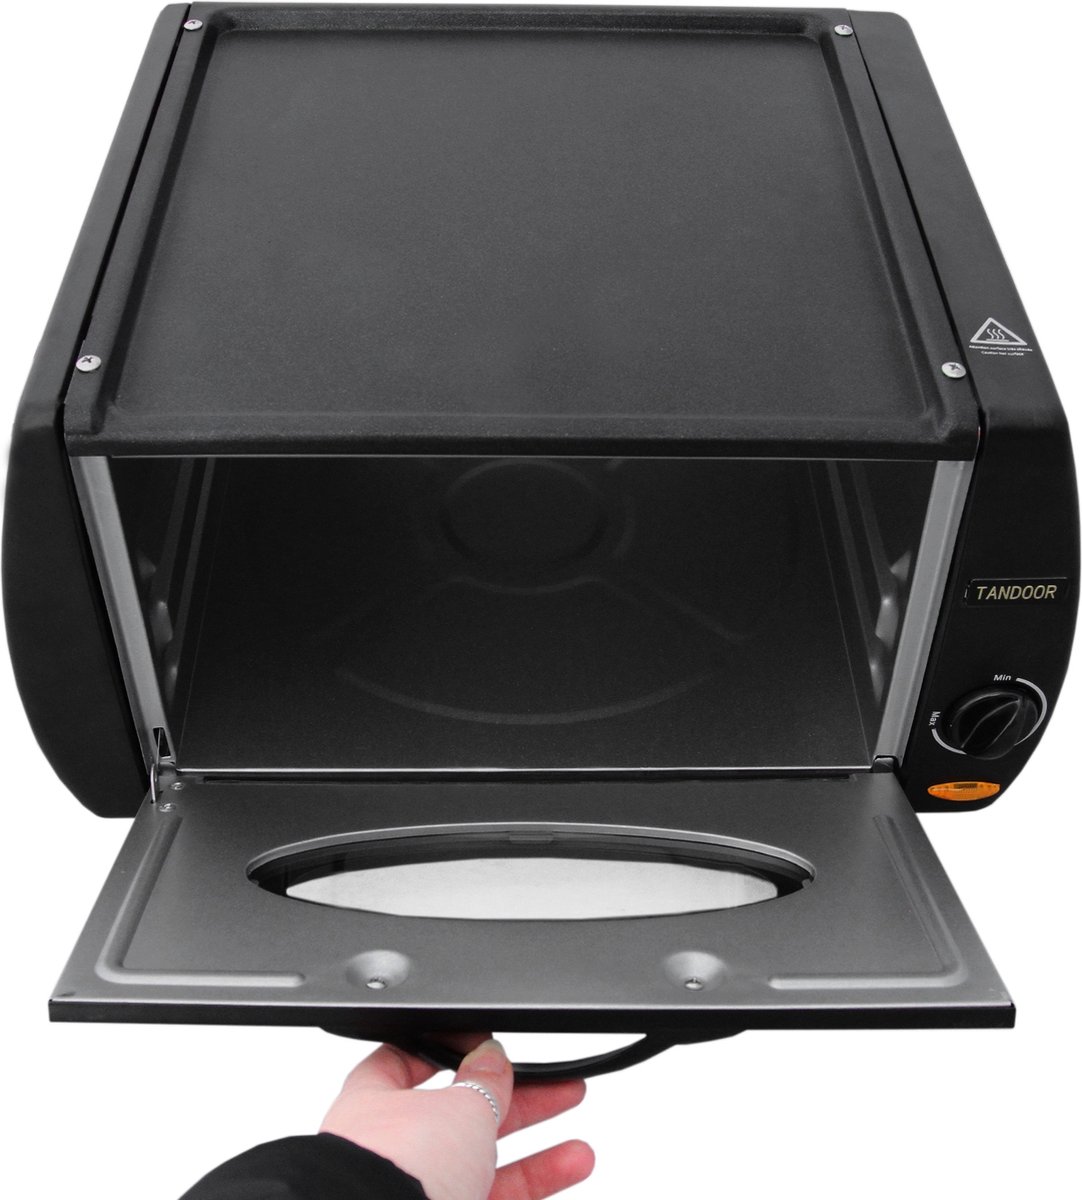 Mini oven - Tandoori - 13 L - 230 V/2100 W - Anti-baklaag - elektrisch |  bol.com